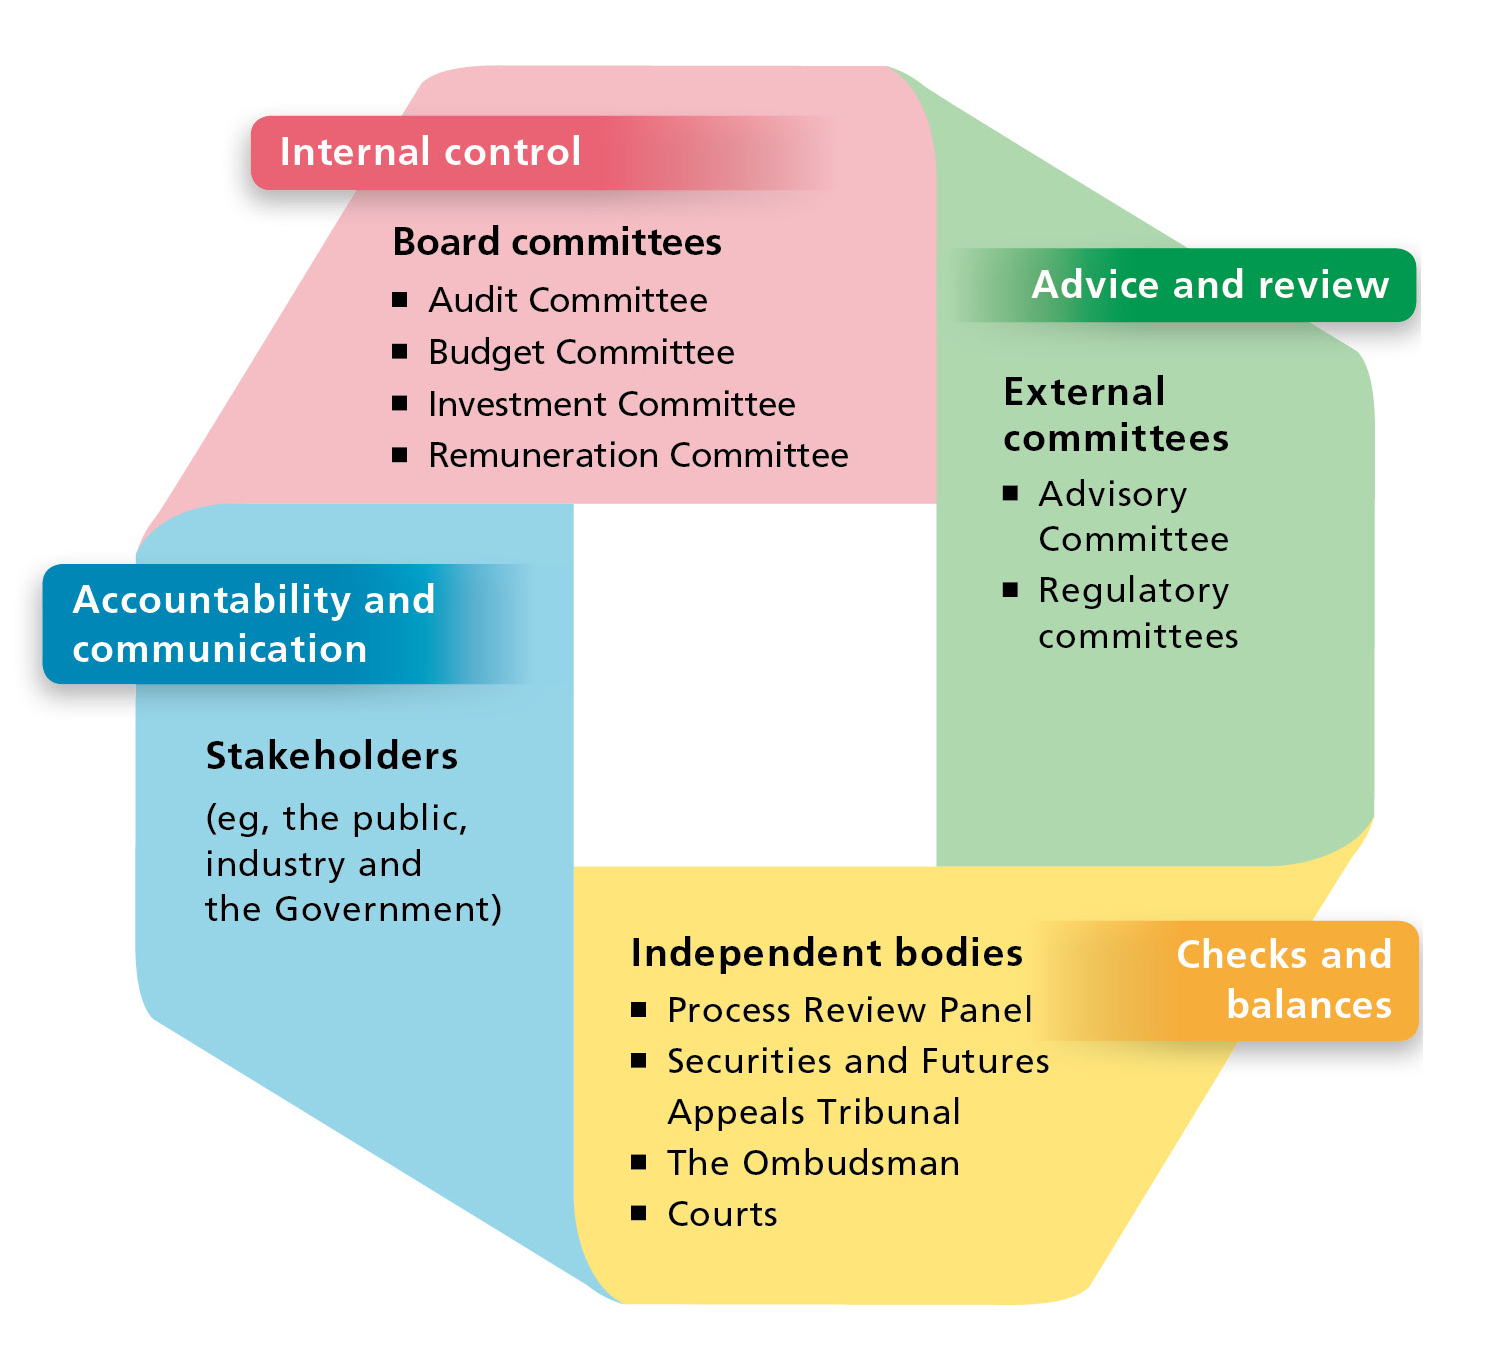  Corporate Governance framework